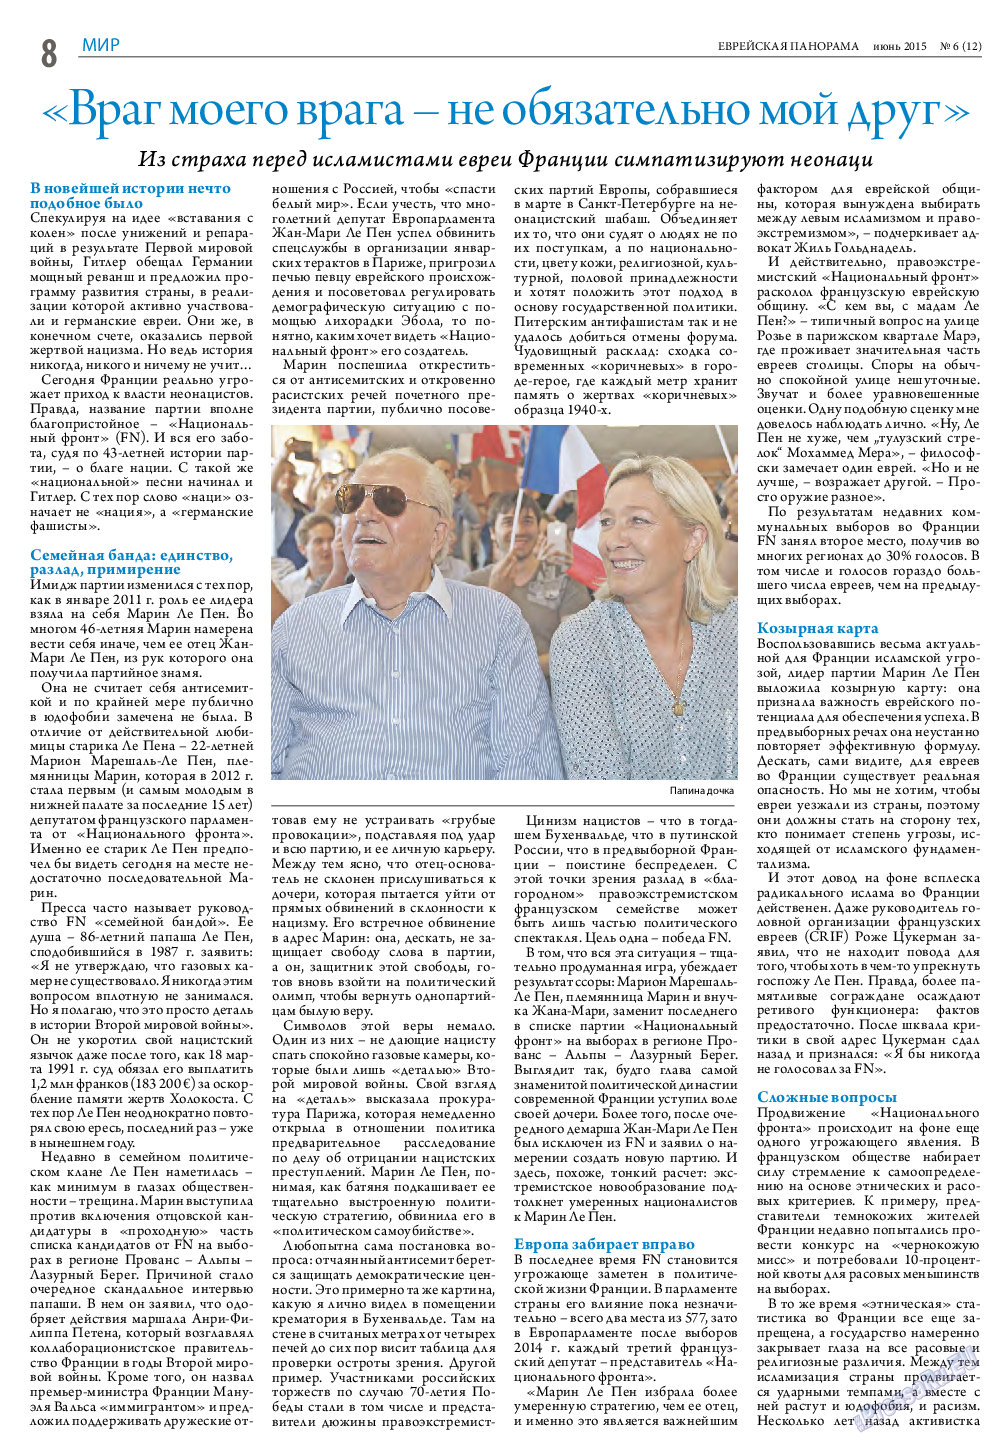 Еврейская панорама, газета. 2015 №6 стр.8